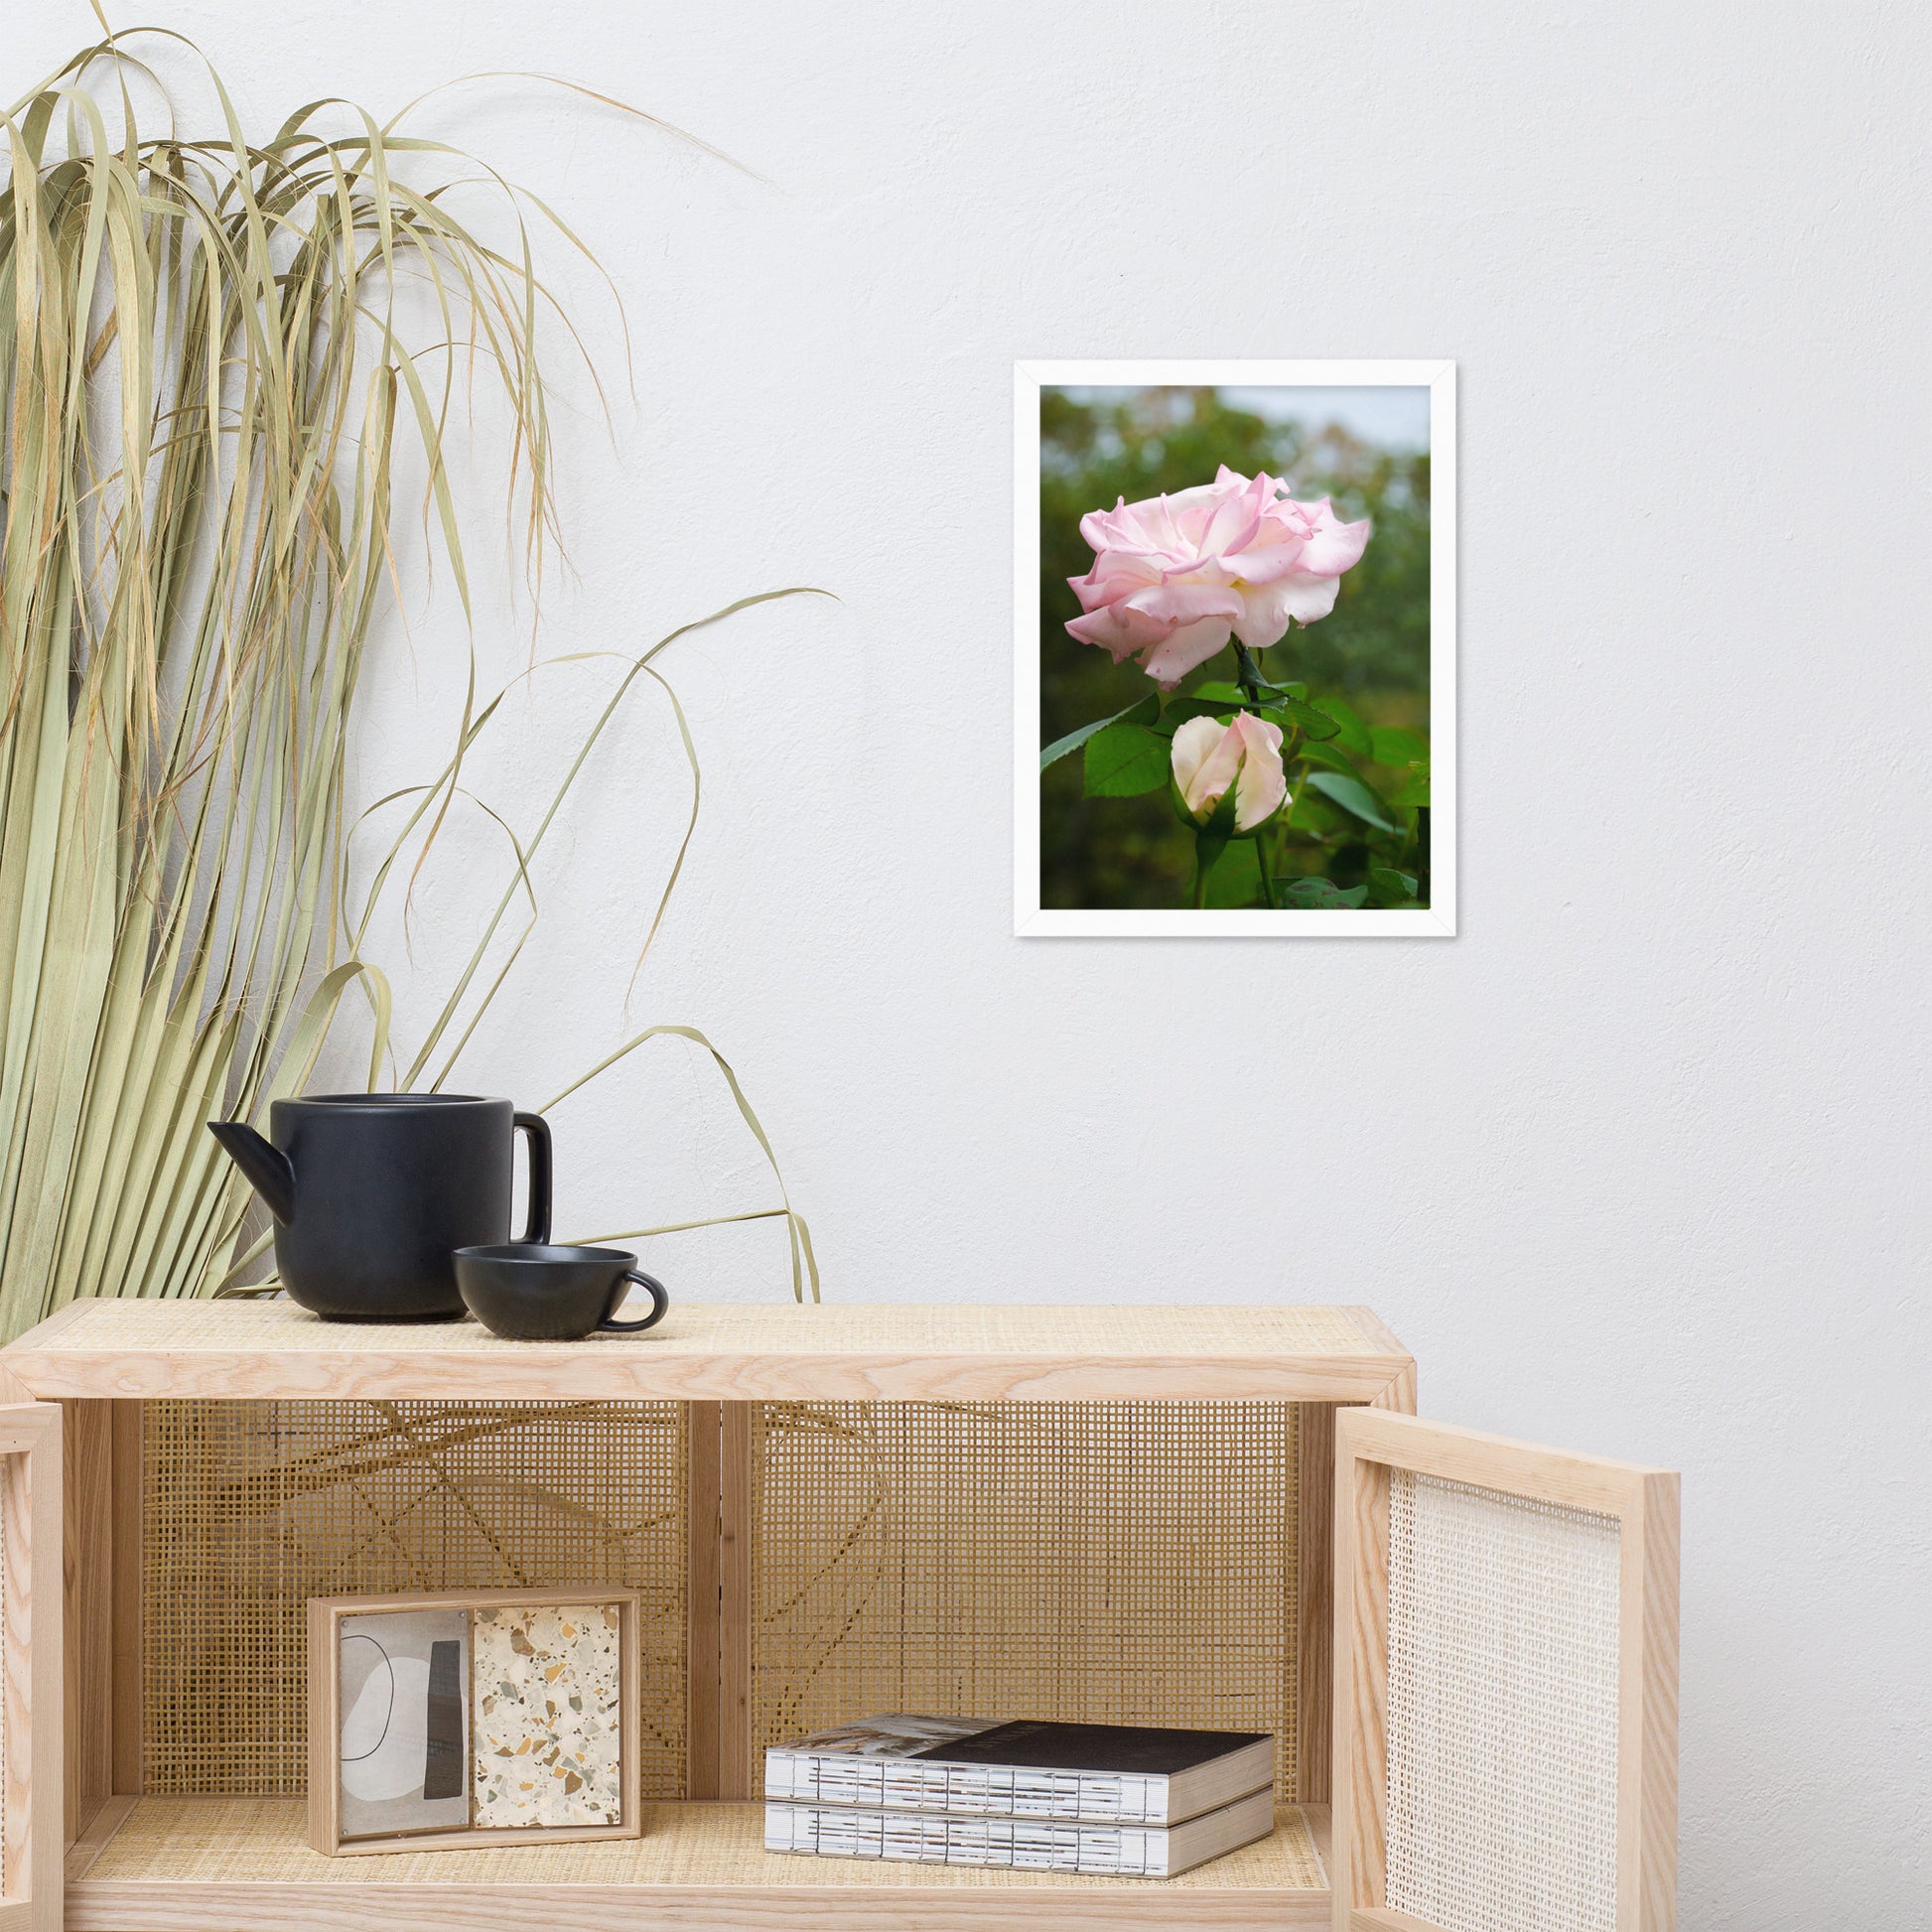 Framed Floral Art: Admiration - Pink Rose Floral / Botanical / Nature Photo Framed Wall Art Print - Artwork - Wall Decor - Home Decor